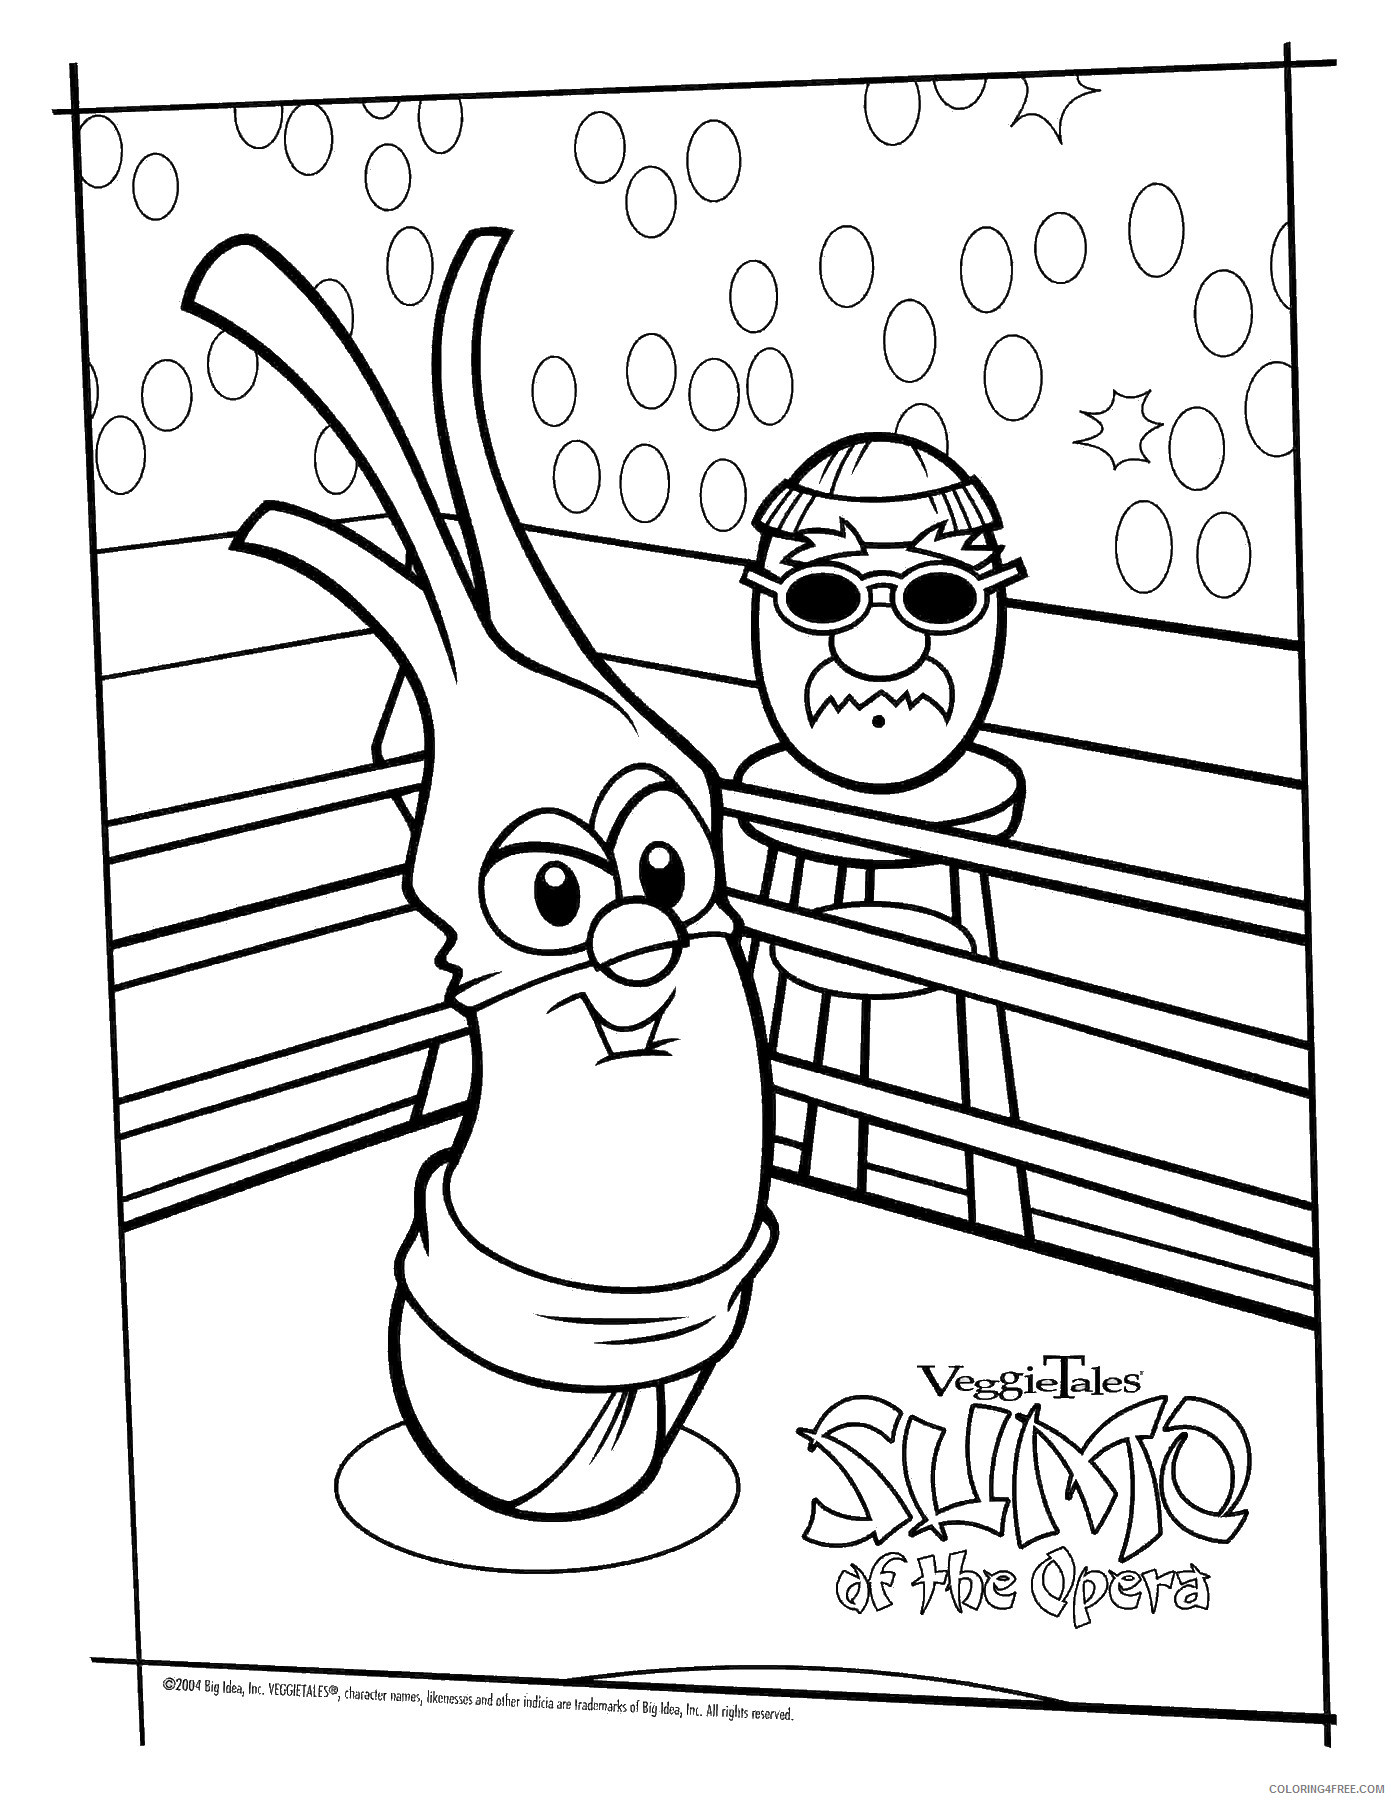 VeggieTales Coloring Pages Cartoons veggie_tales_cl_25 Printable 2020 6836 Coloring4free